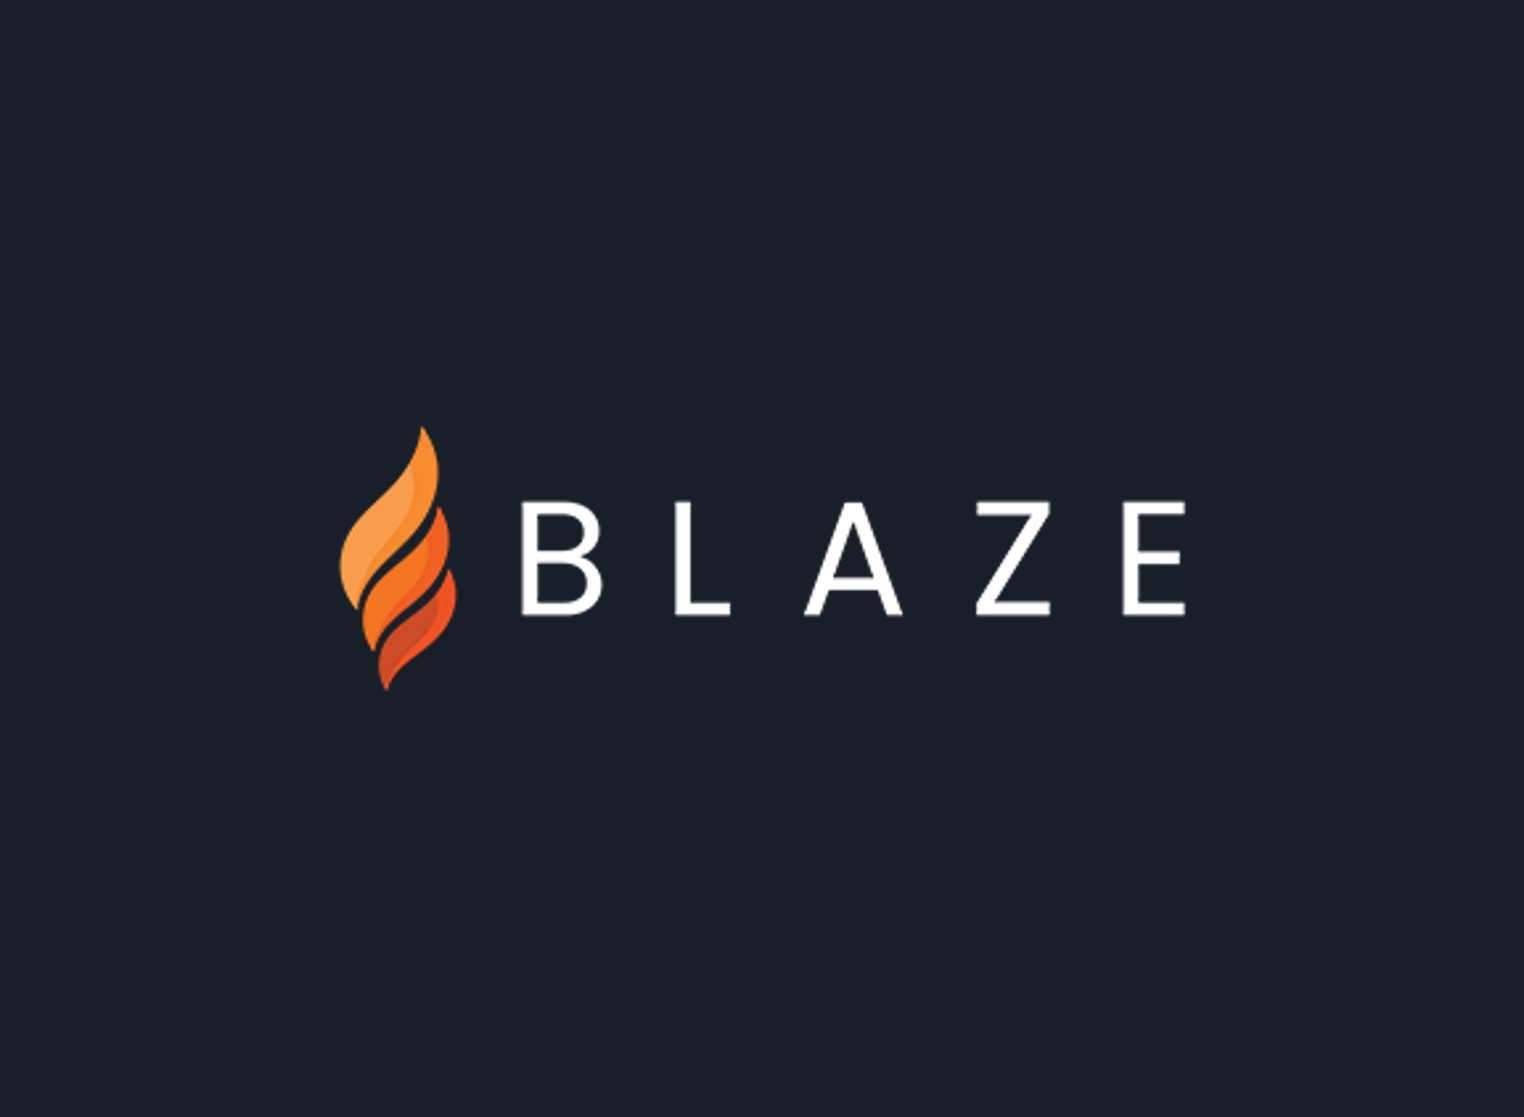 Blaze Creative Presentations